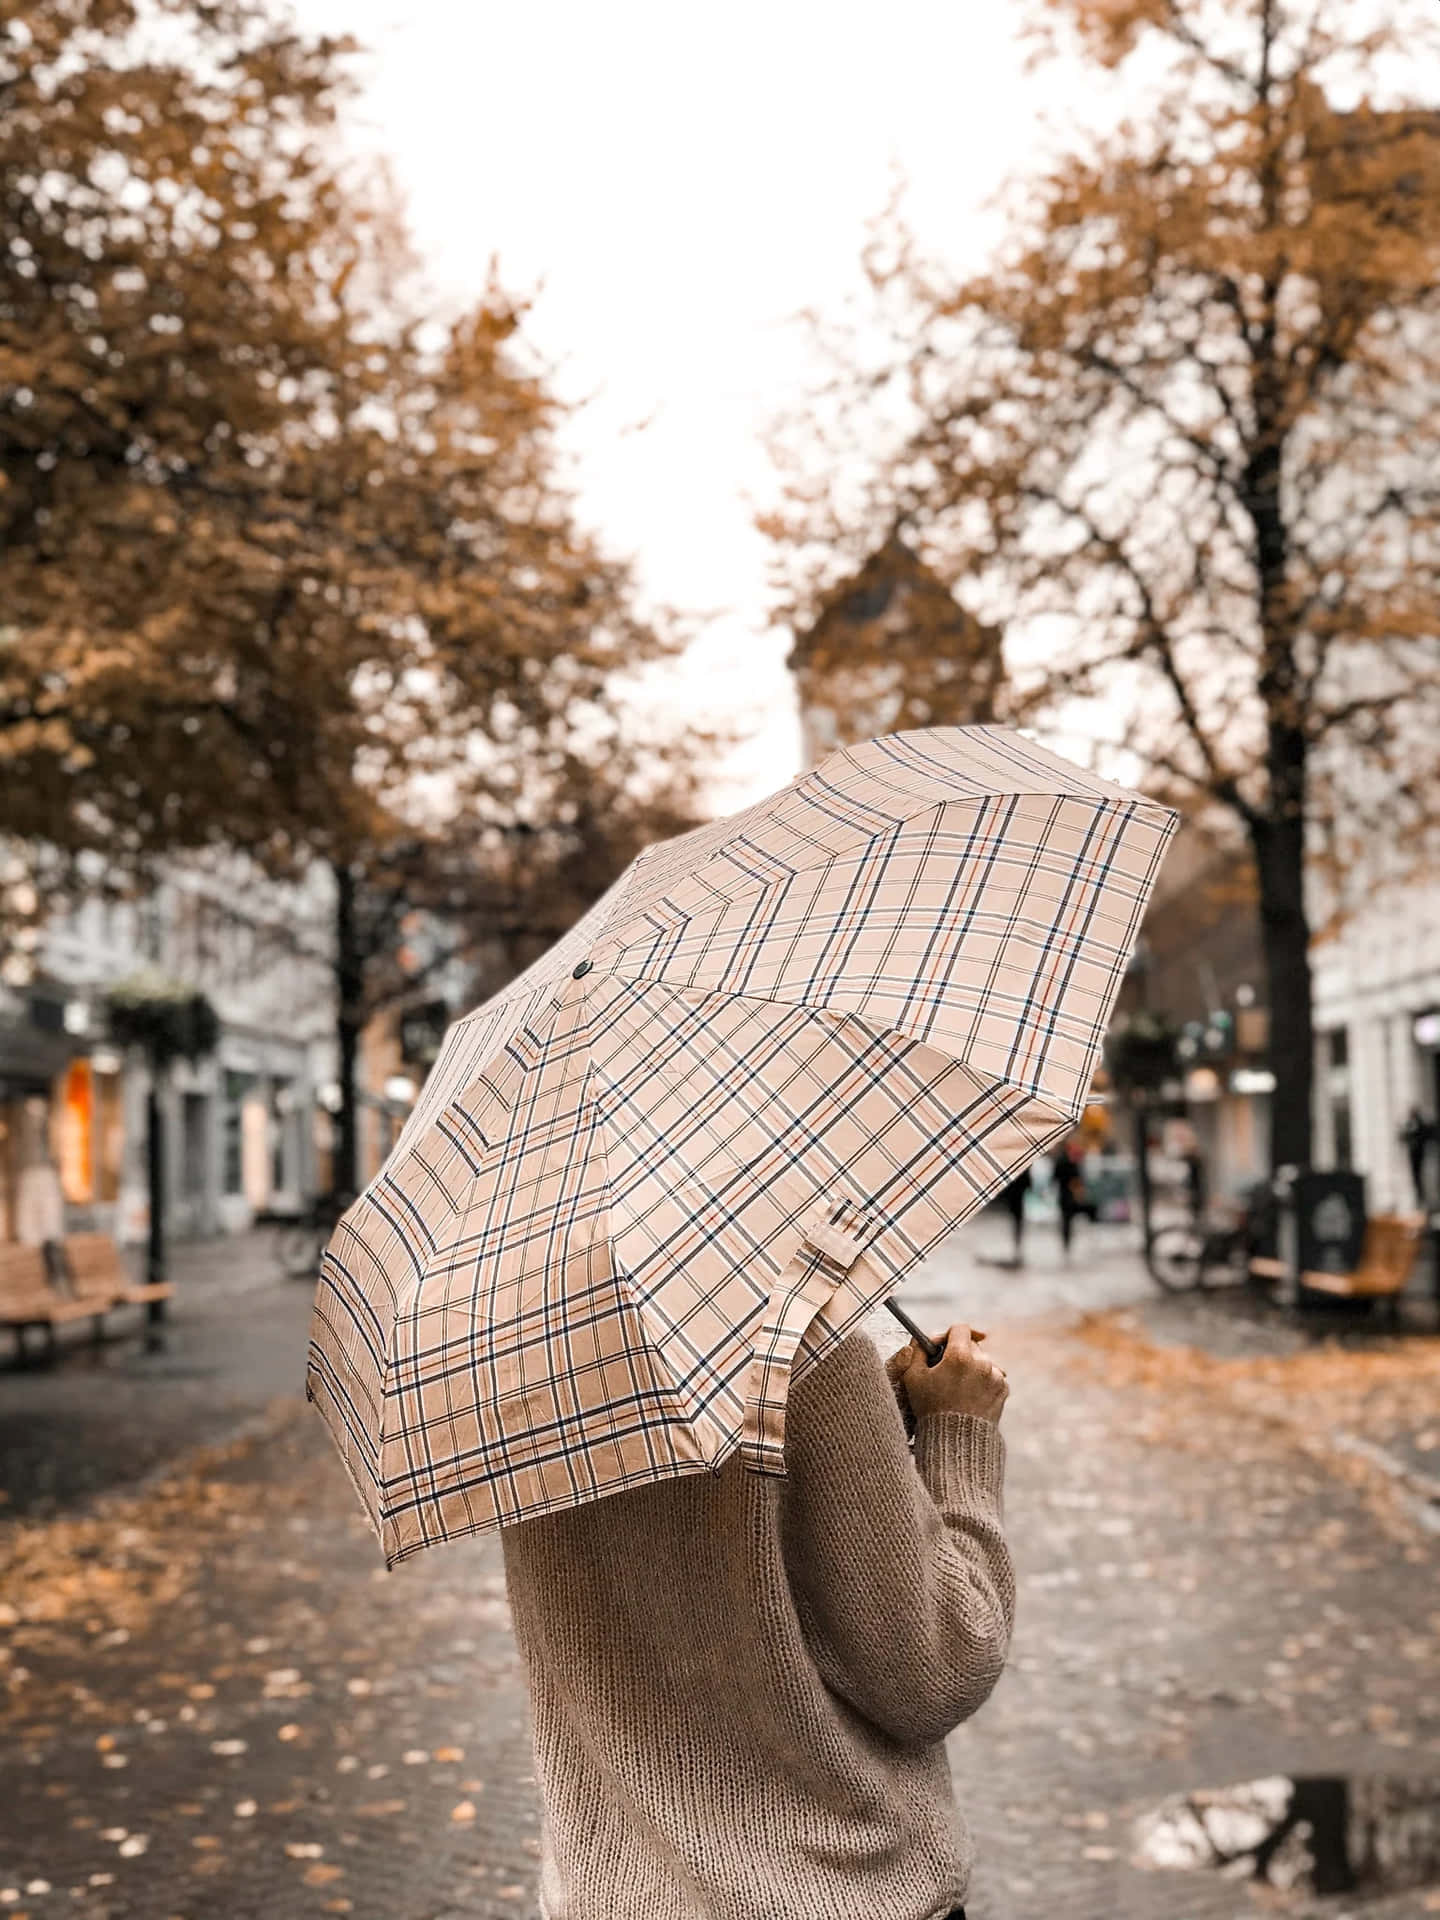 Autumn Umbrella Stroll.jpg Wallpaper